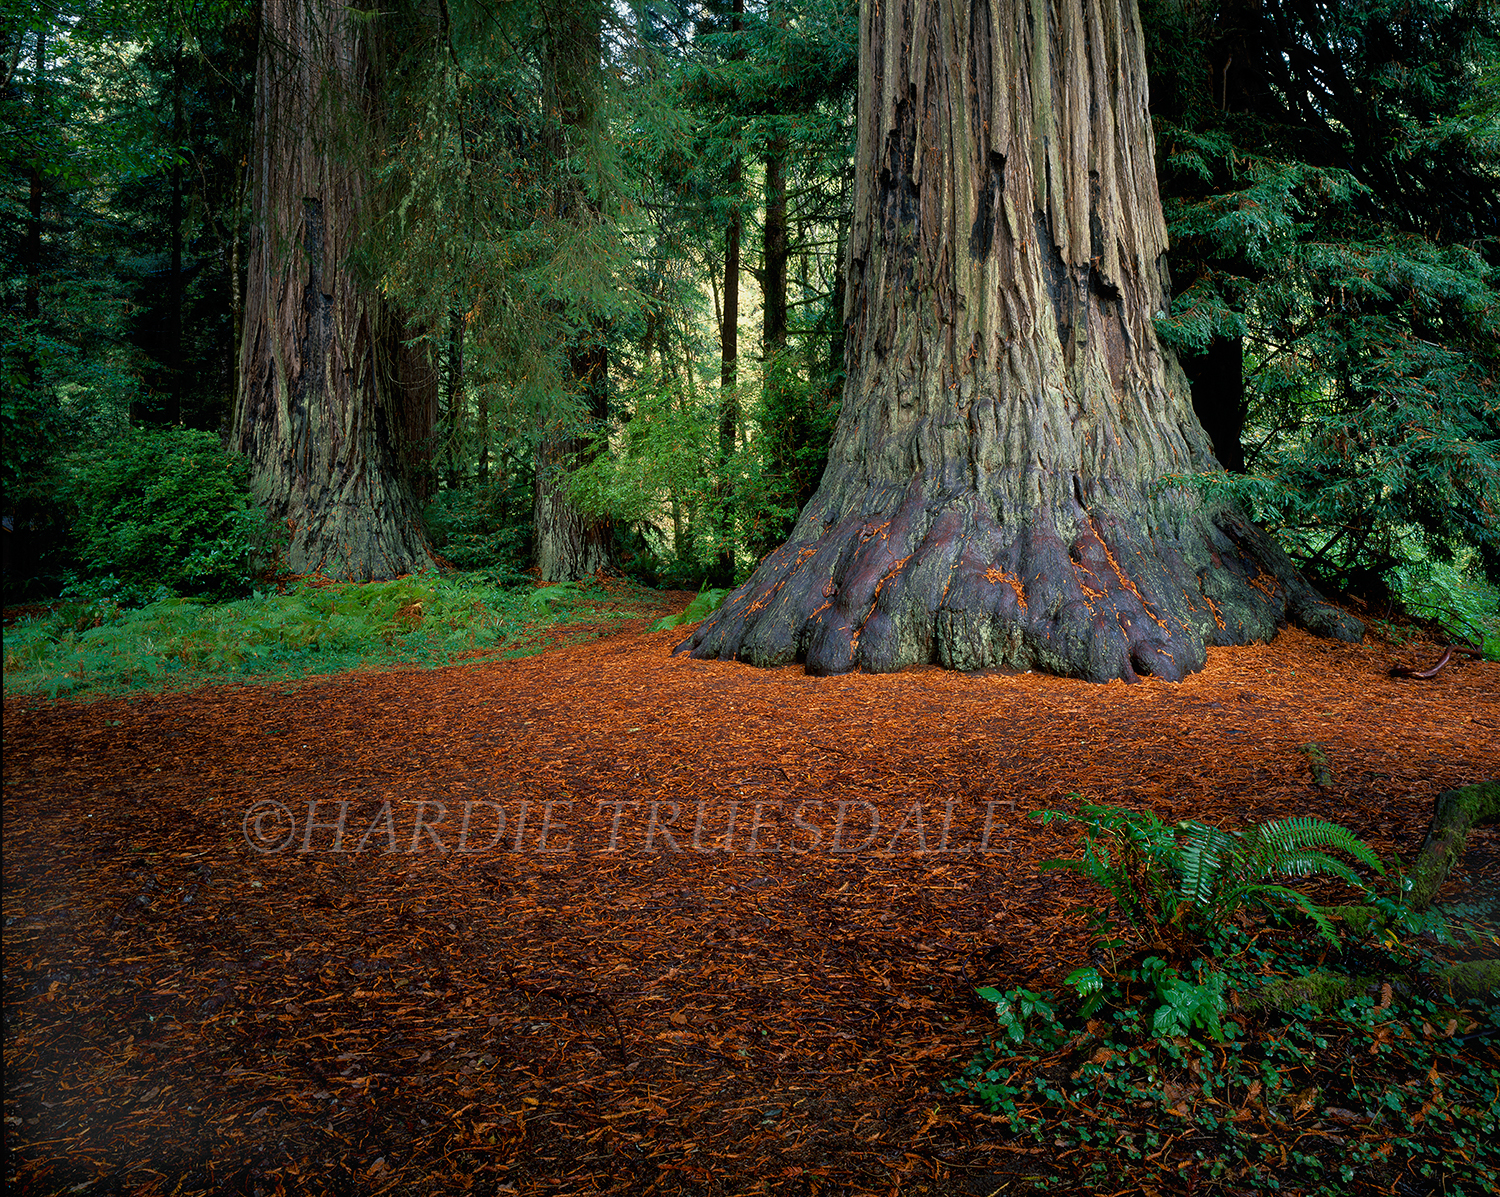  CA#028 "Big Foot, Prairie Creek Redwoods State Park, CA" 